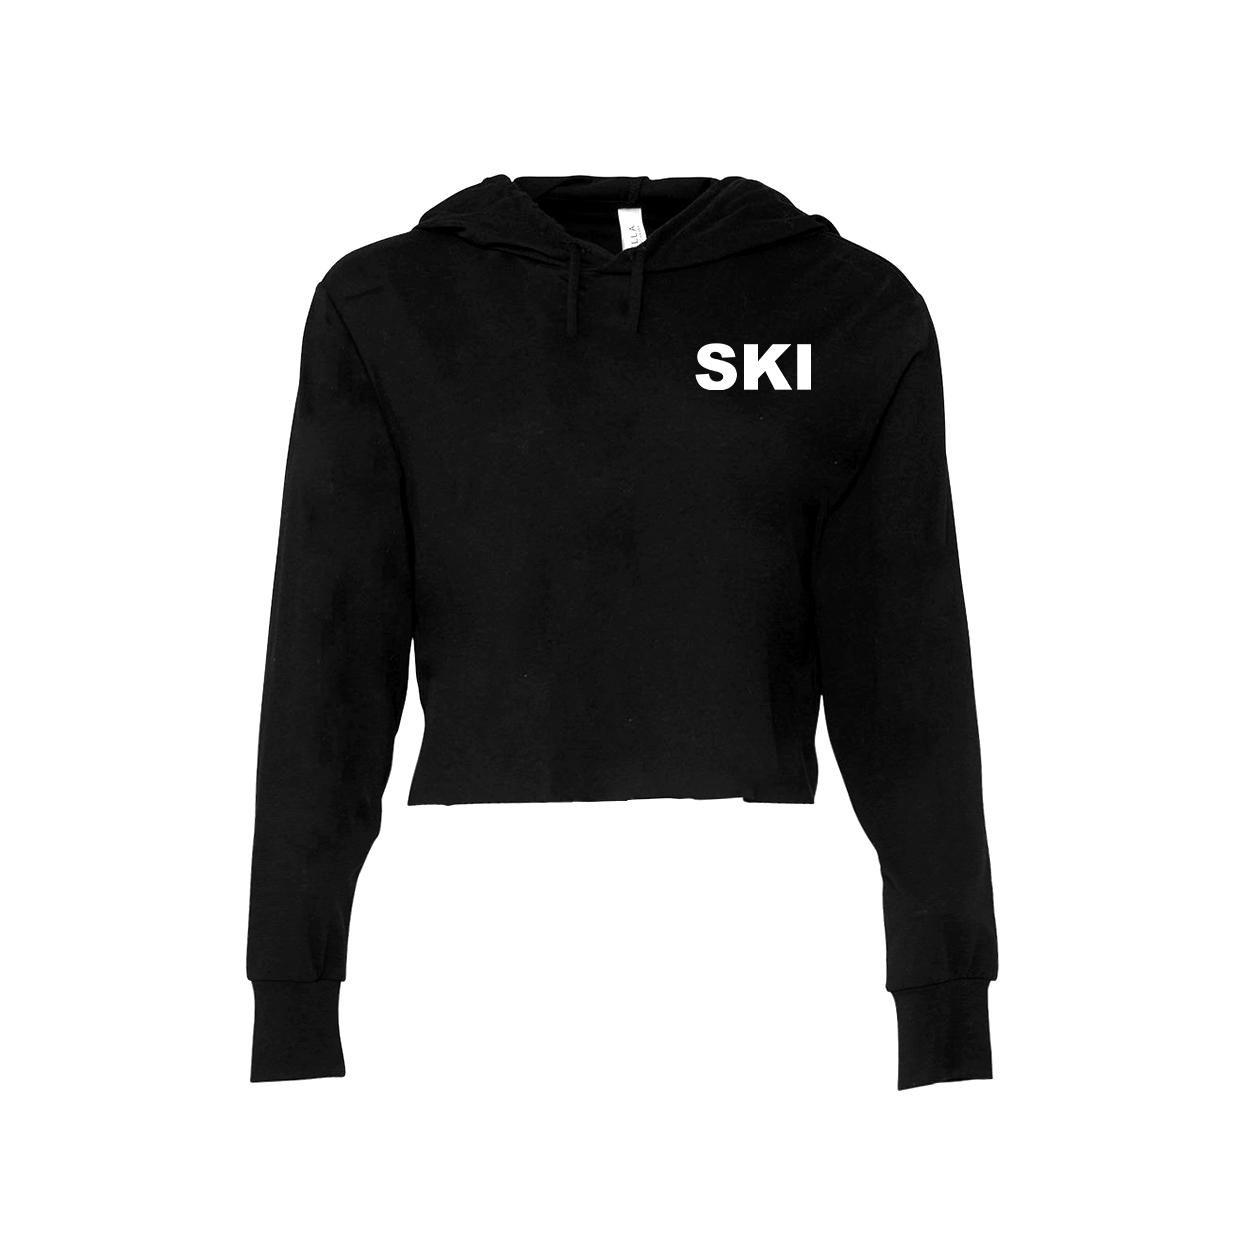 Ski Brand Logo Night Out Womens Cropped Sweatshirt Black (White Logo)